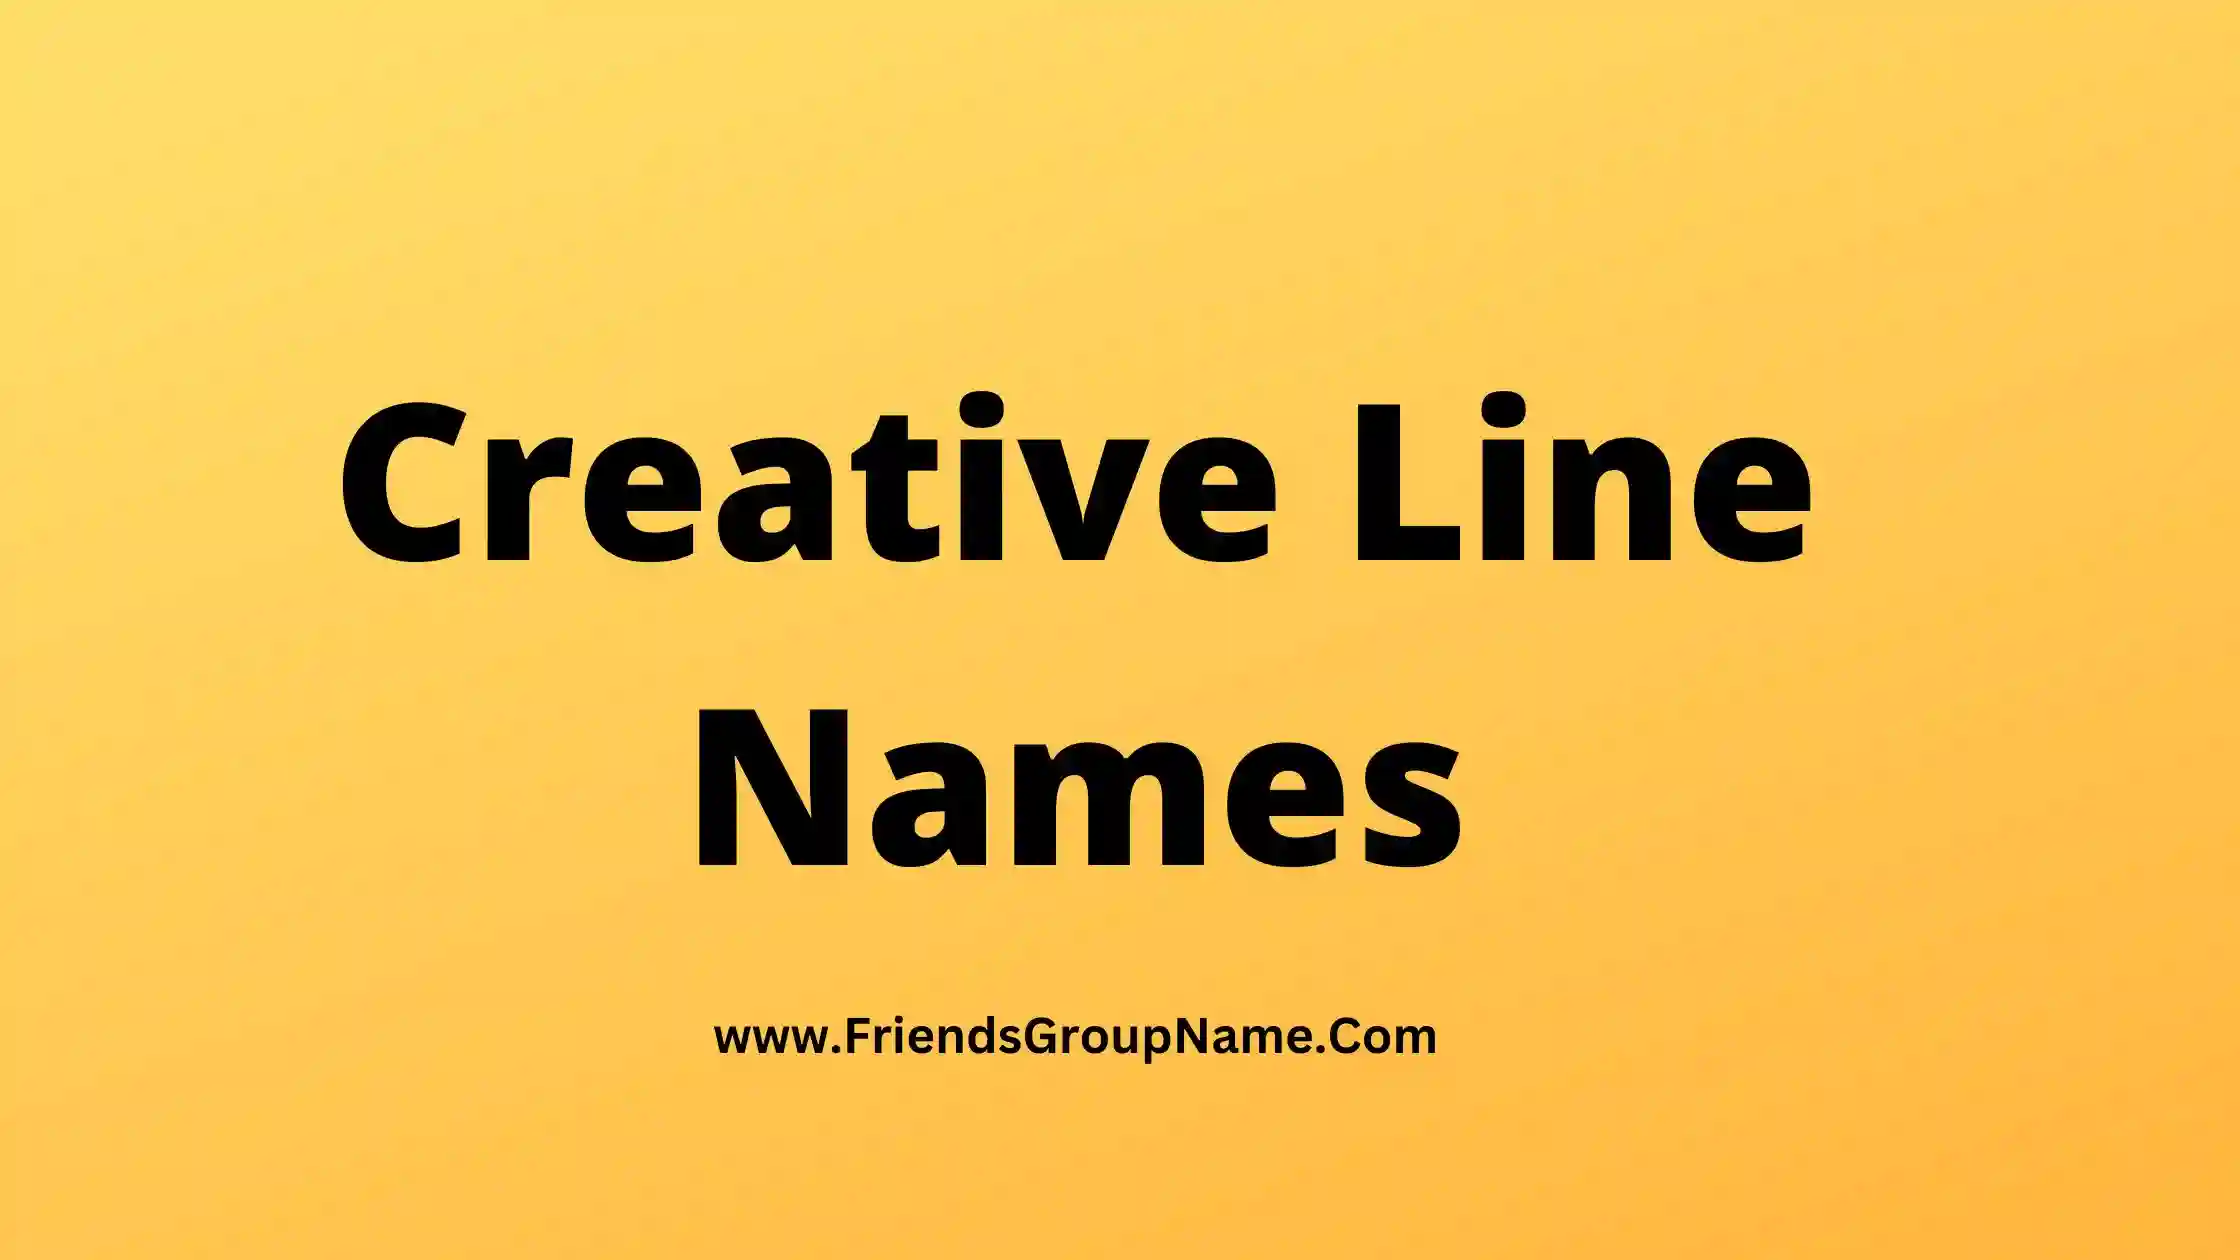 Creative Line Names